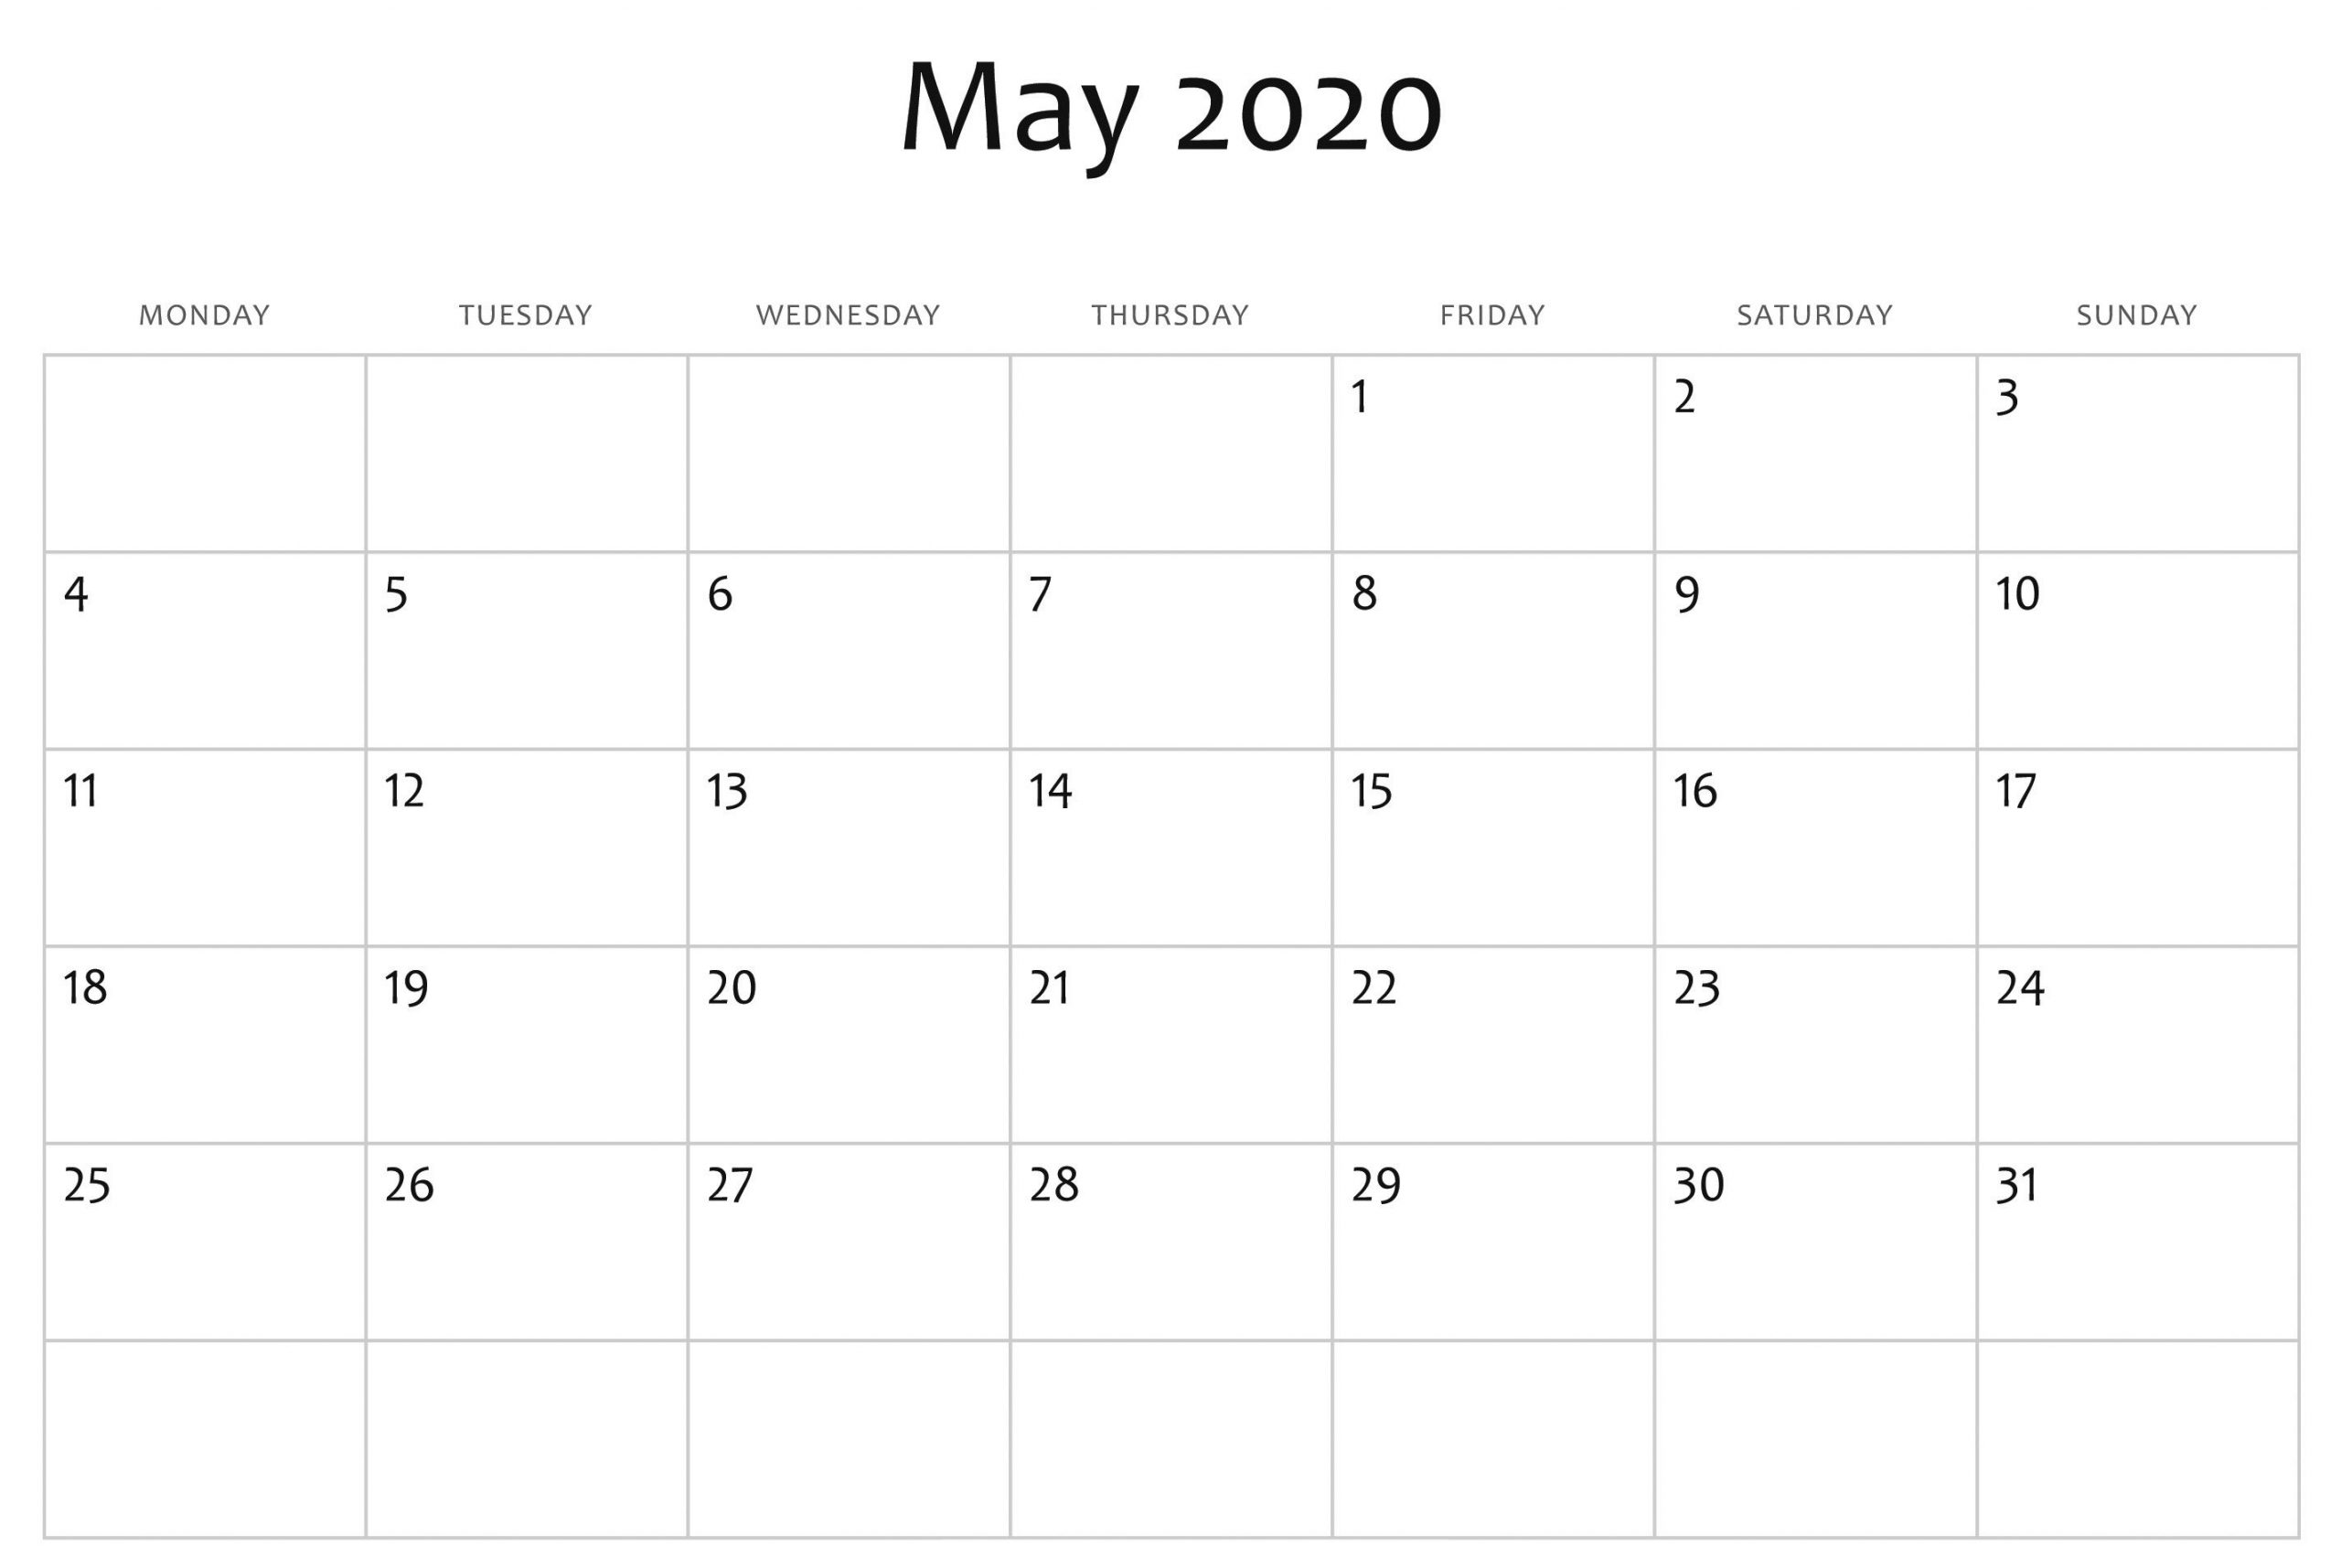 May 2020 Calendar Blank Template | May Calendar Printable